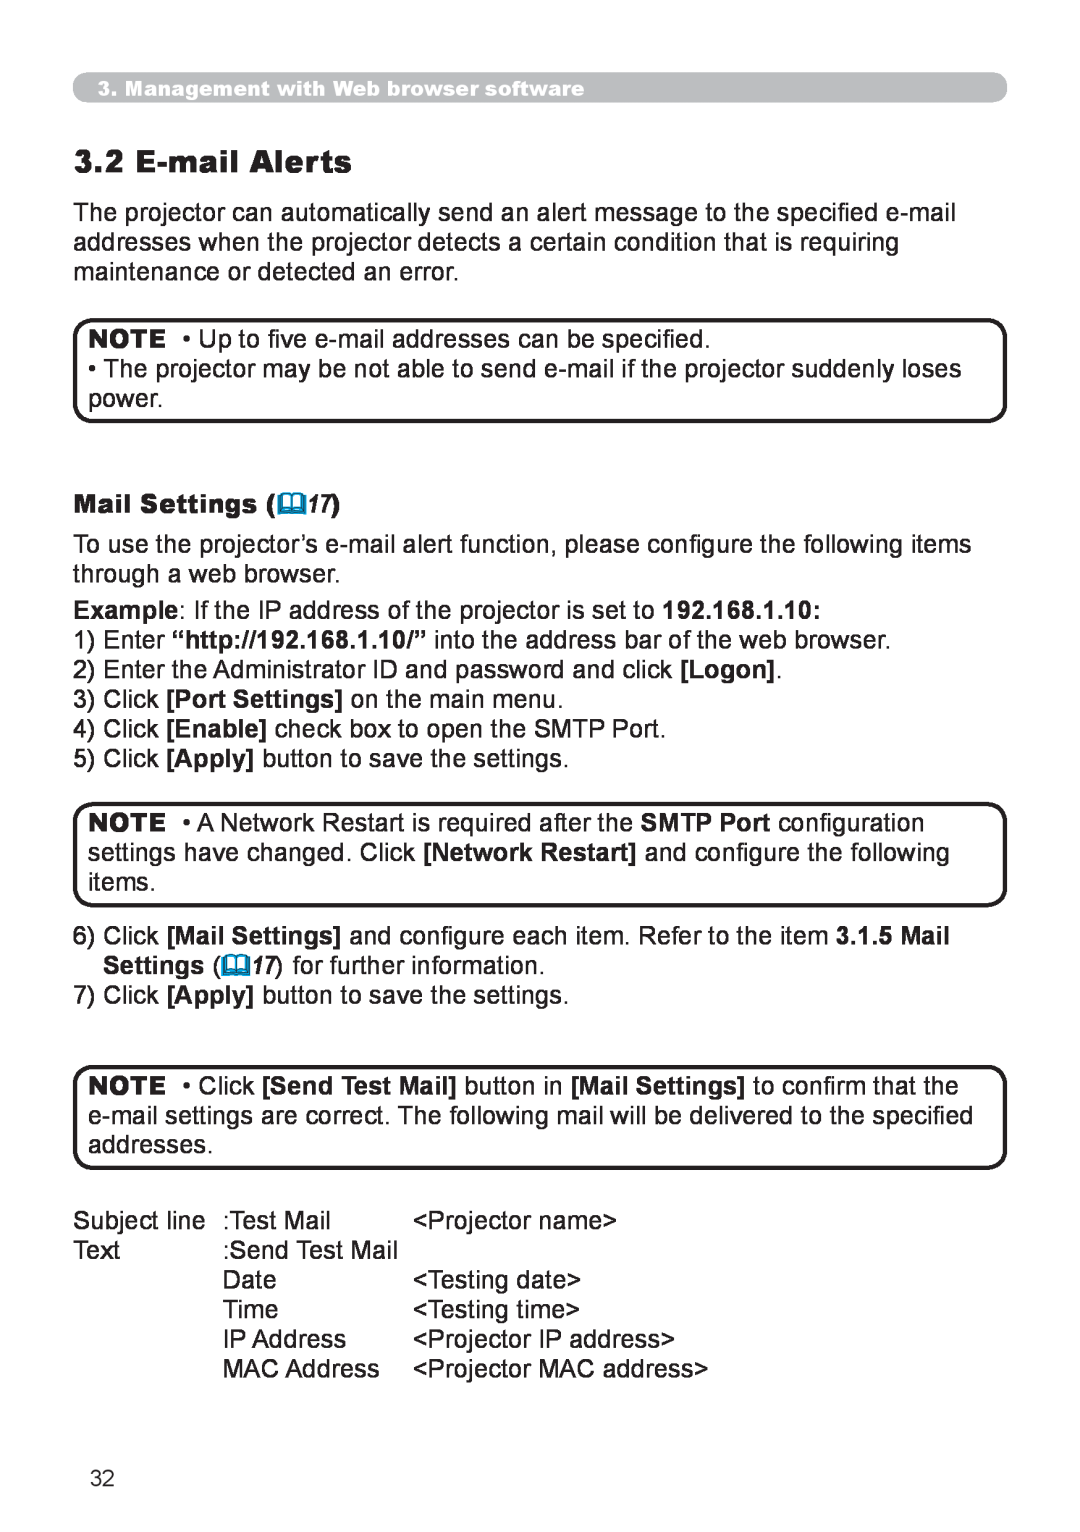 Planar PR9030 user manual E-mail Alerts, Mail Settings 17 